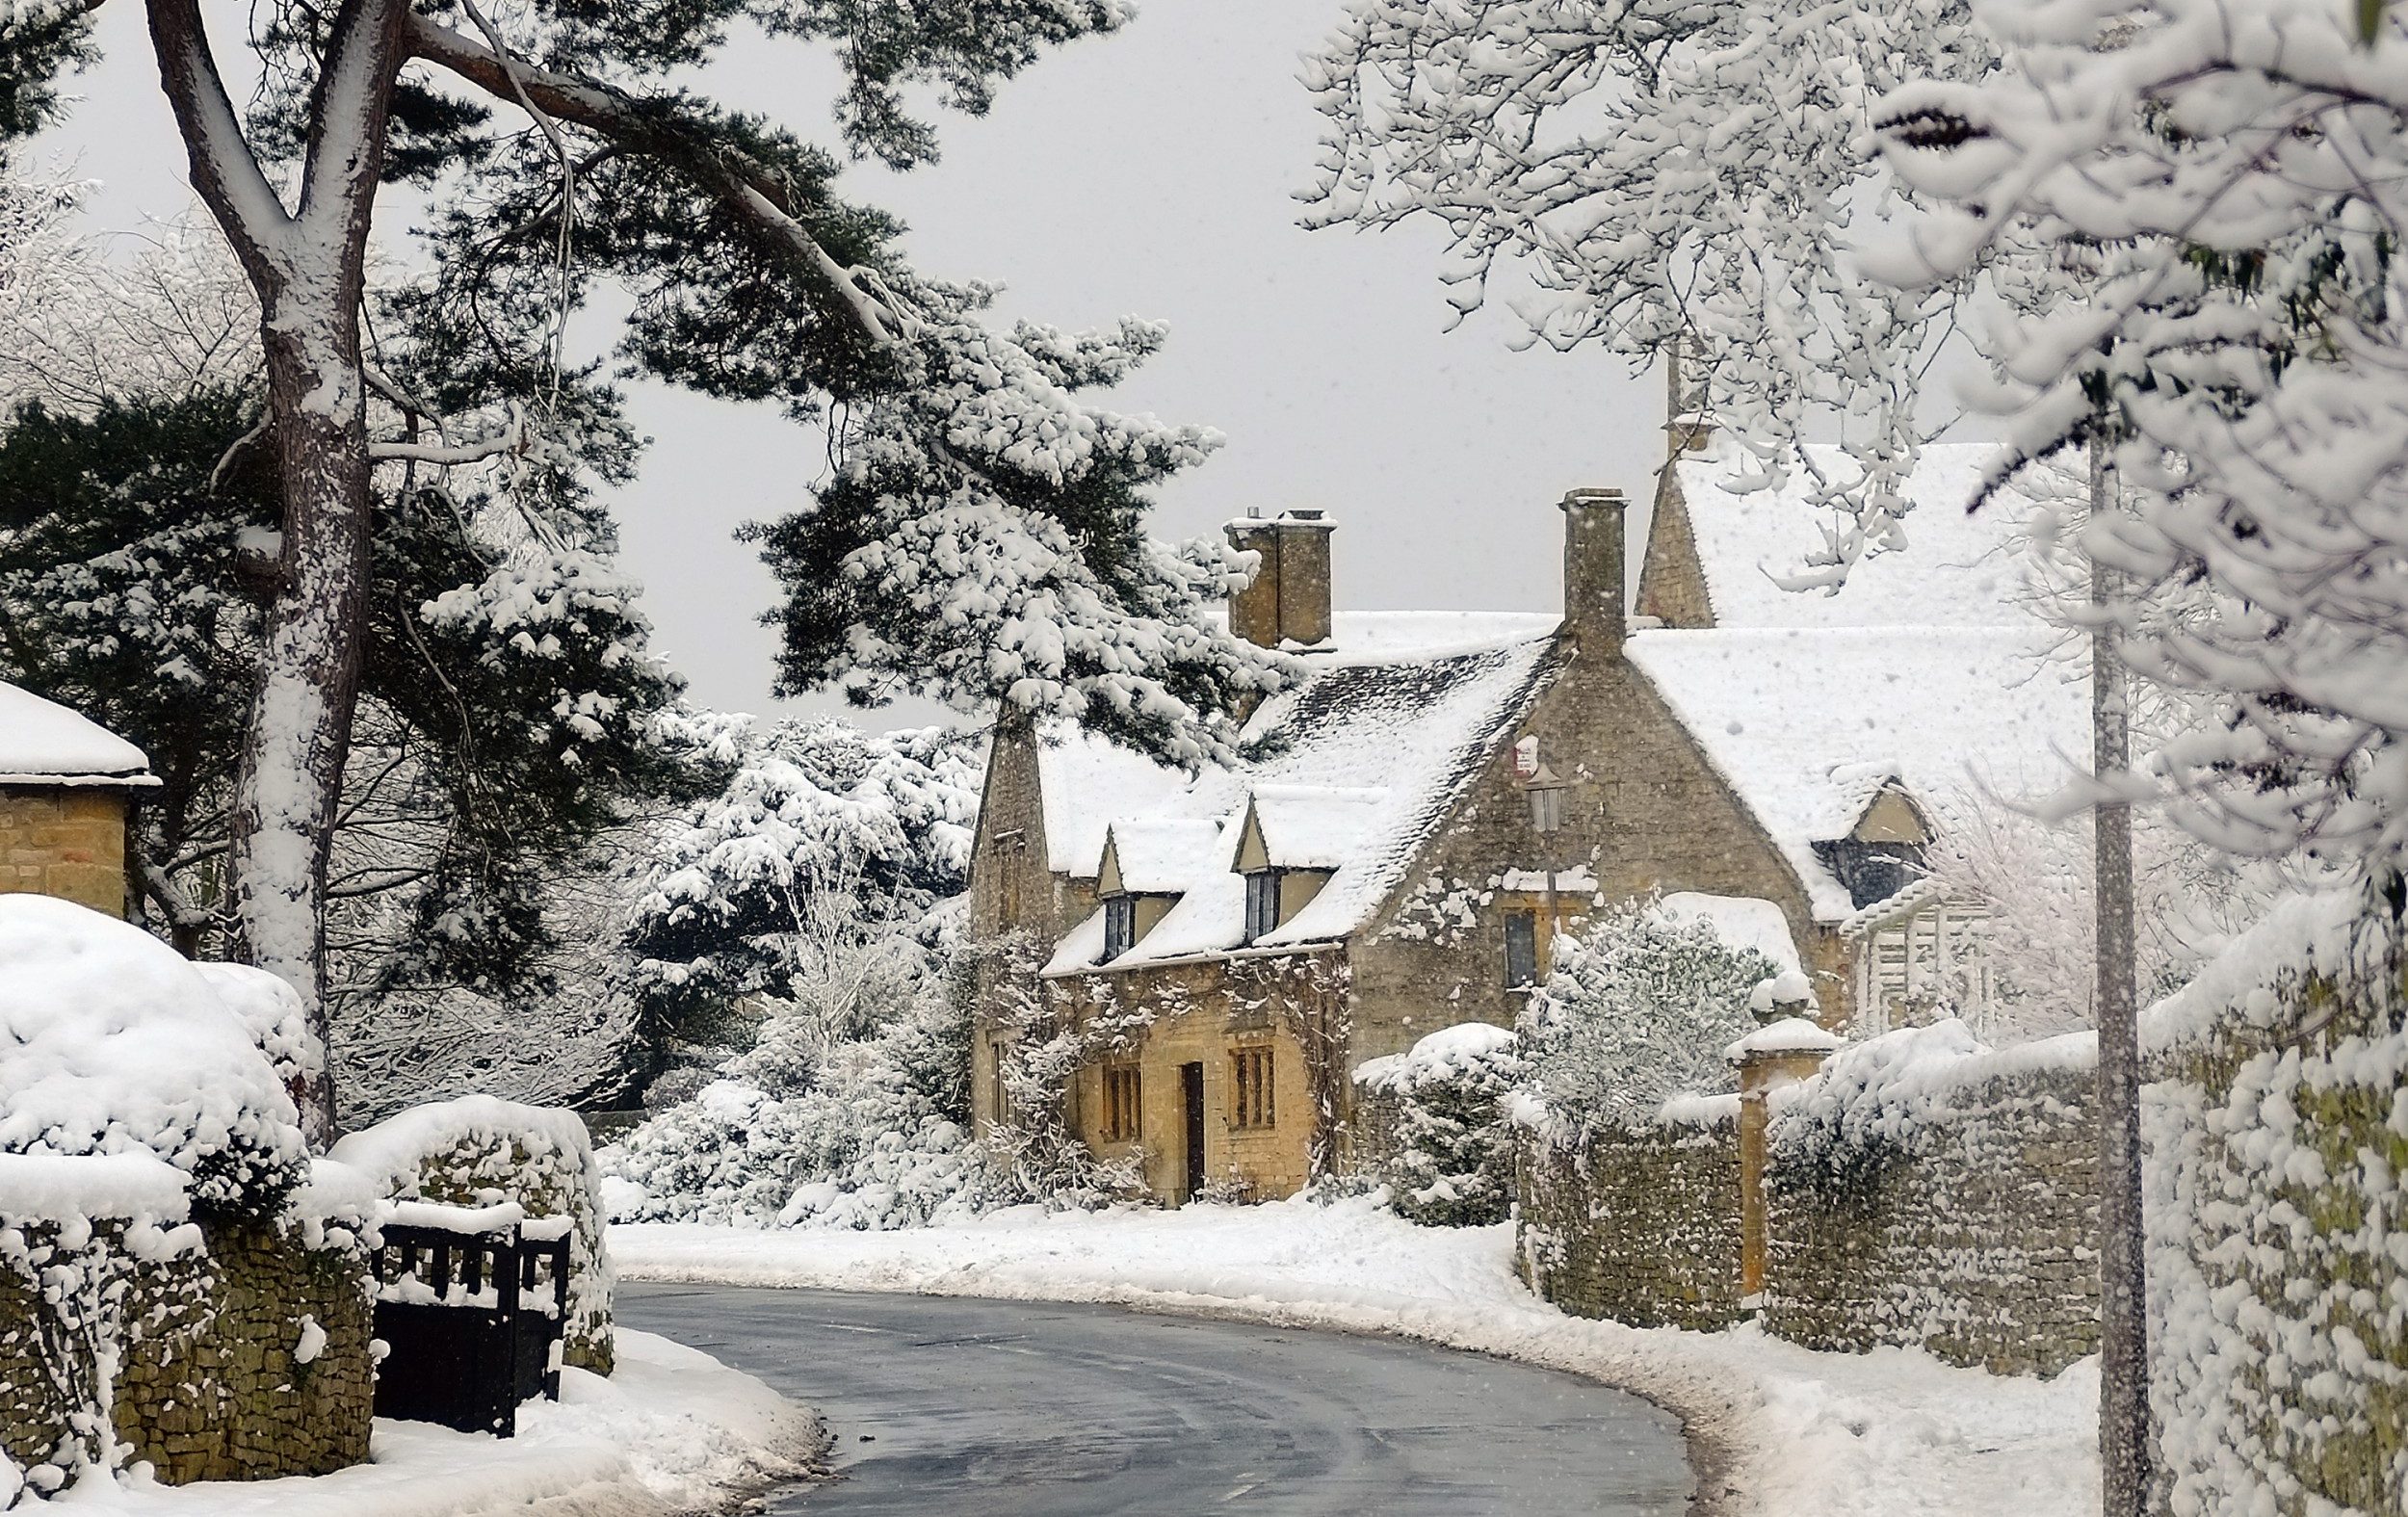 10 of britain's wildest winter experiences